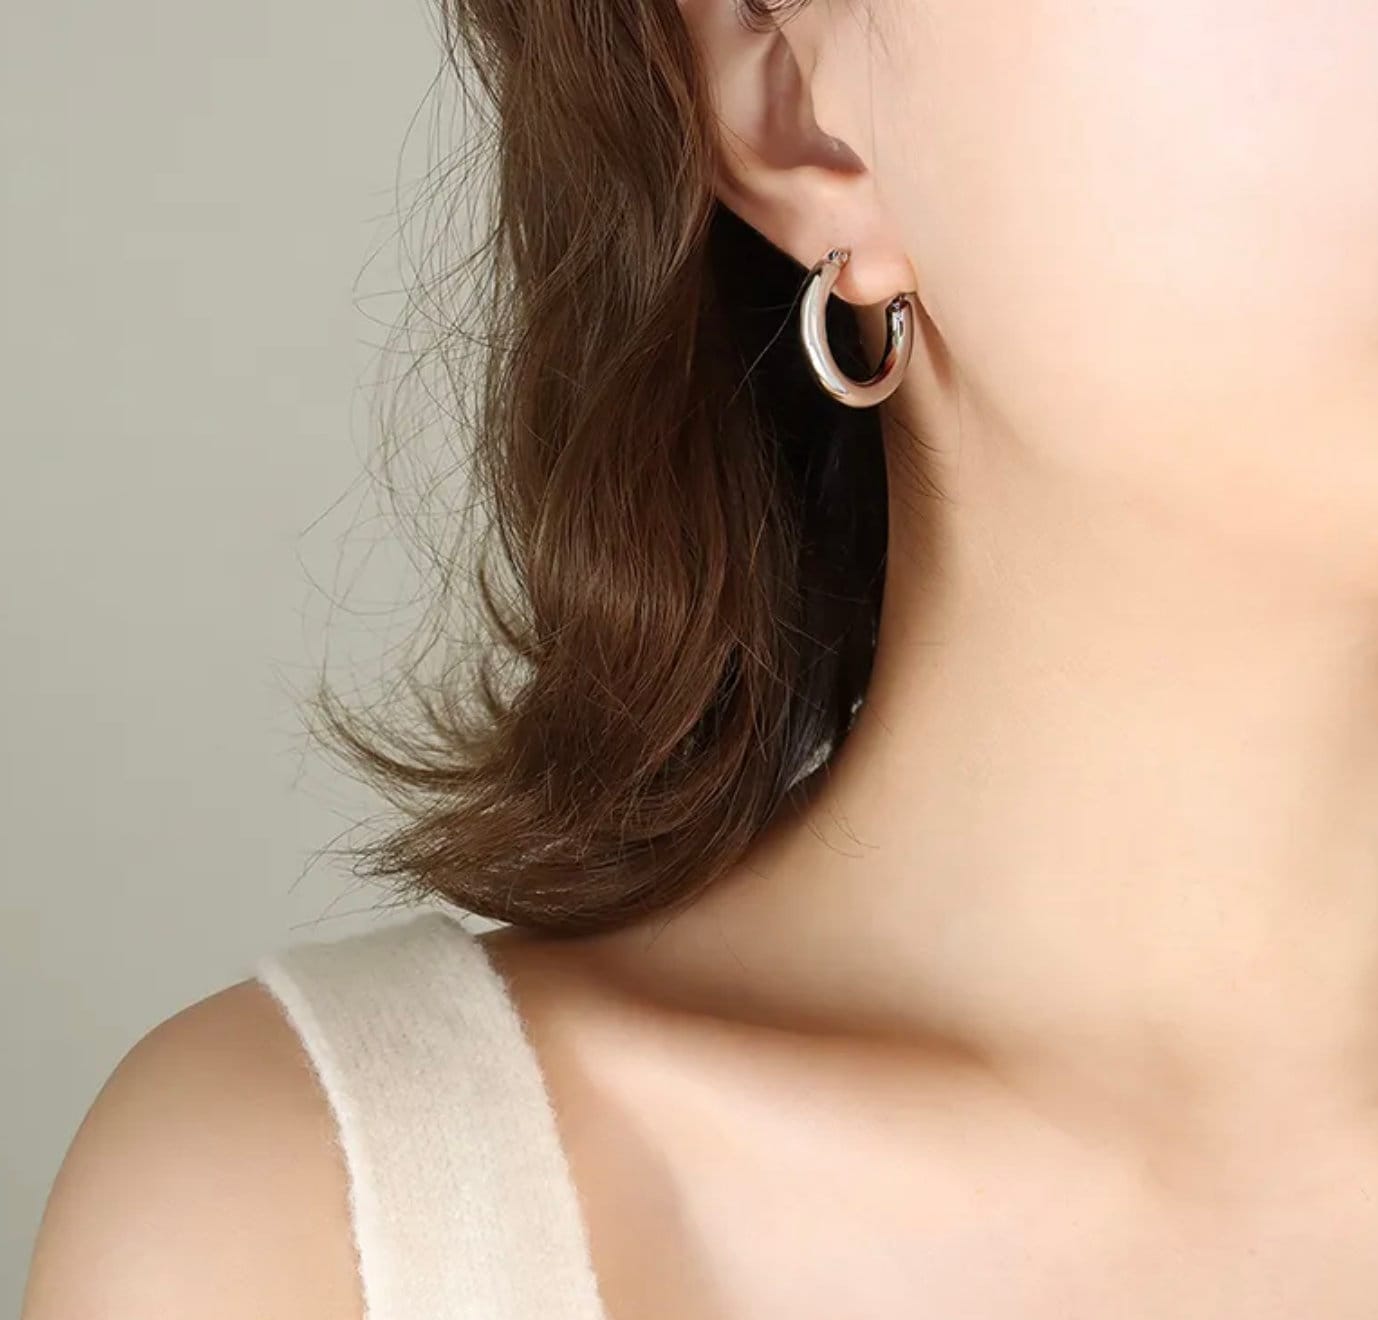 Titanium Simple Hoop Earrings, Non Tarnish Earrings, Implant Grade Titanium Waterproof Earrings, Vintage Style Earrings, Minimal